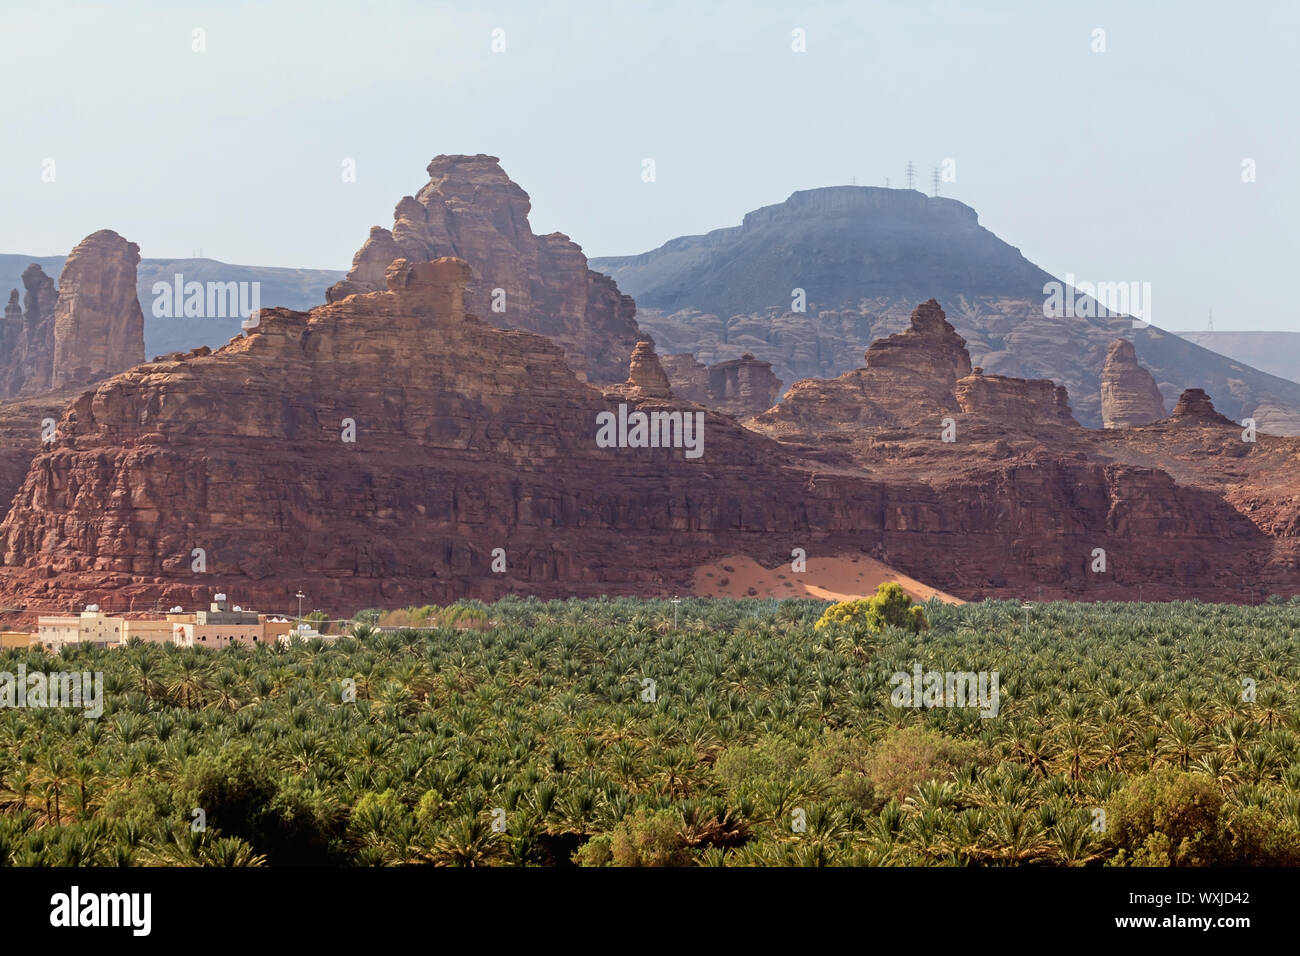 Mountain landscape view from Al-Ula city, Saudi Arabia Stock Photo